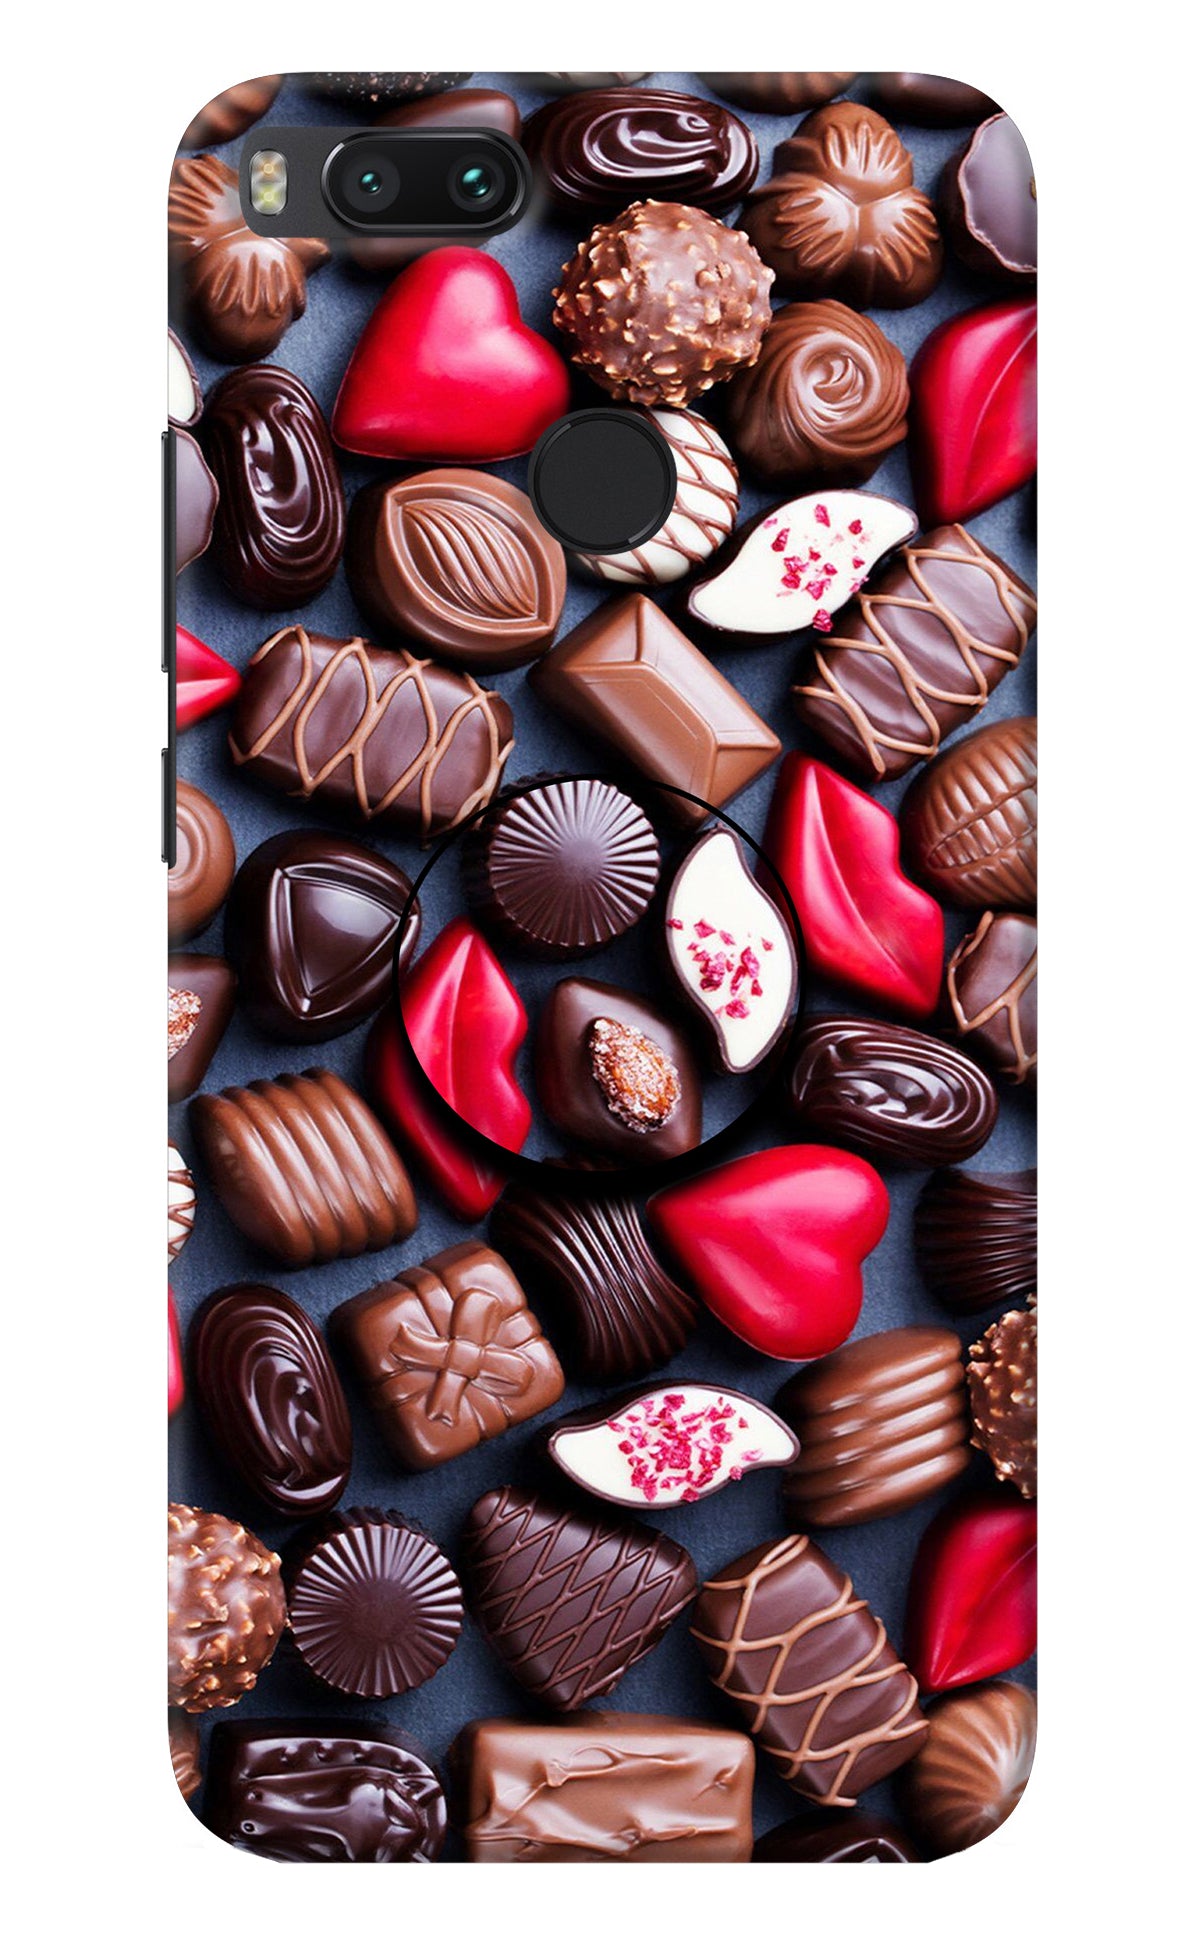 Chocolates Mi A1 Pop Case